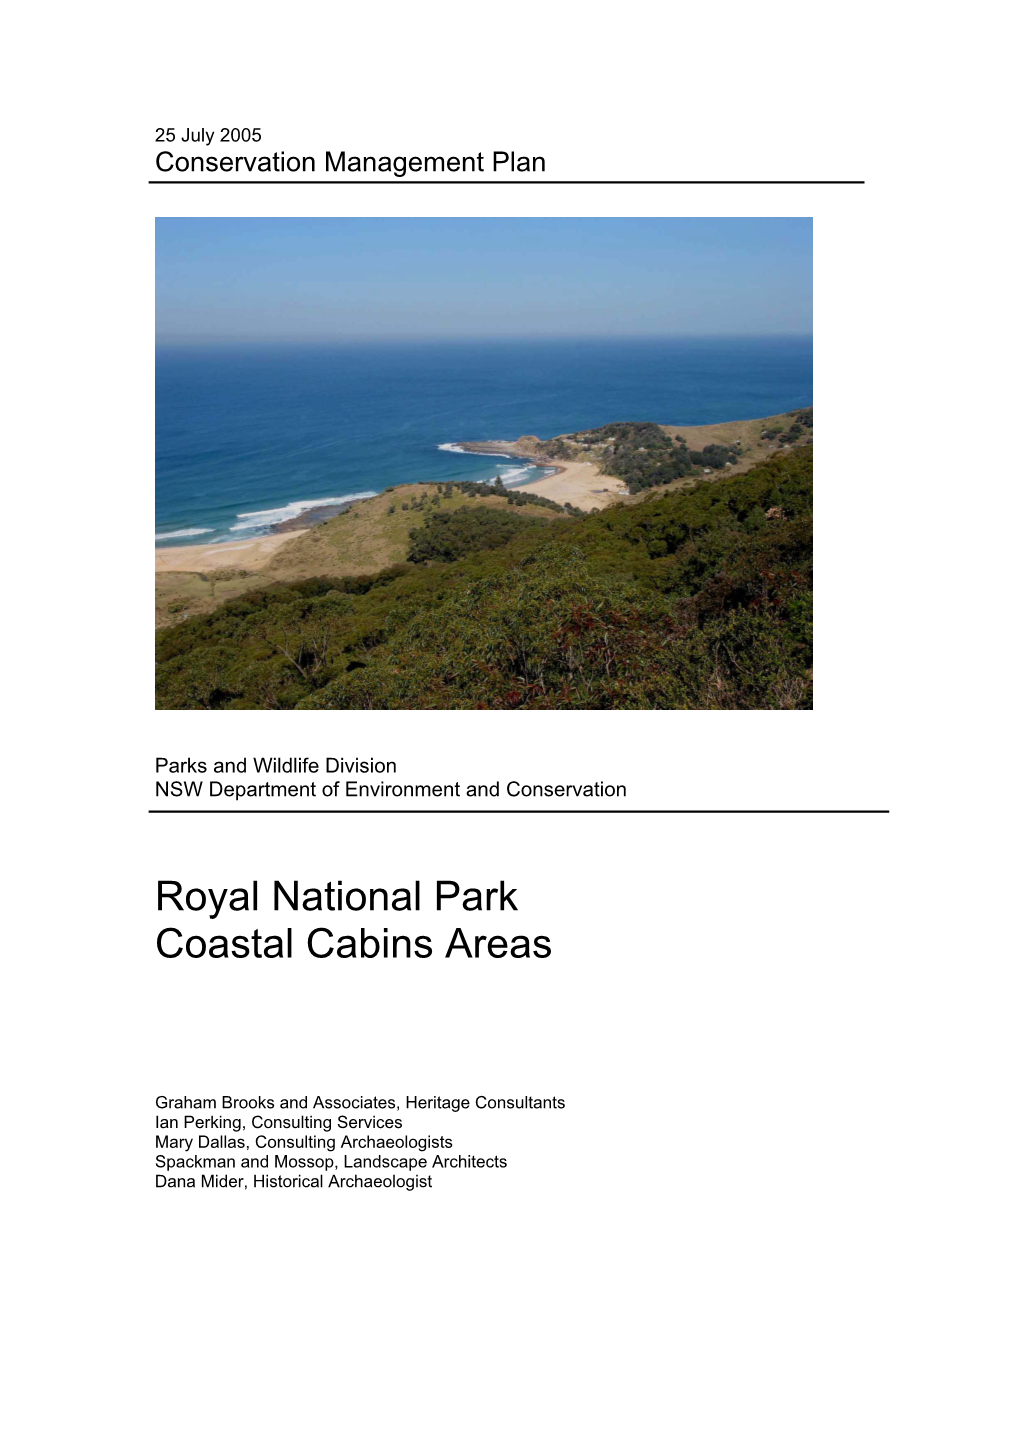 Royal National Park Coastal Cabins Areas Conservation Management